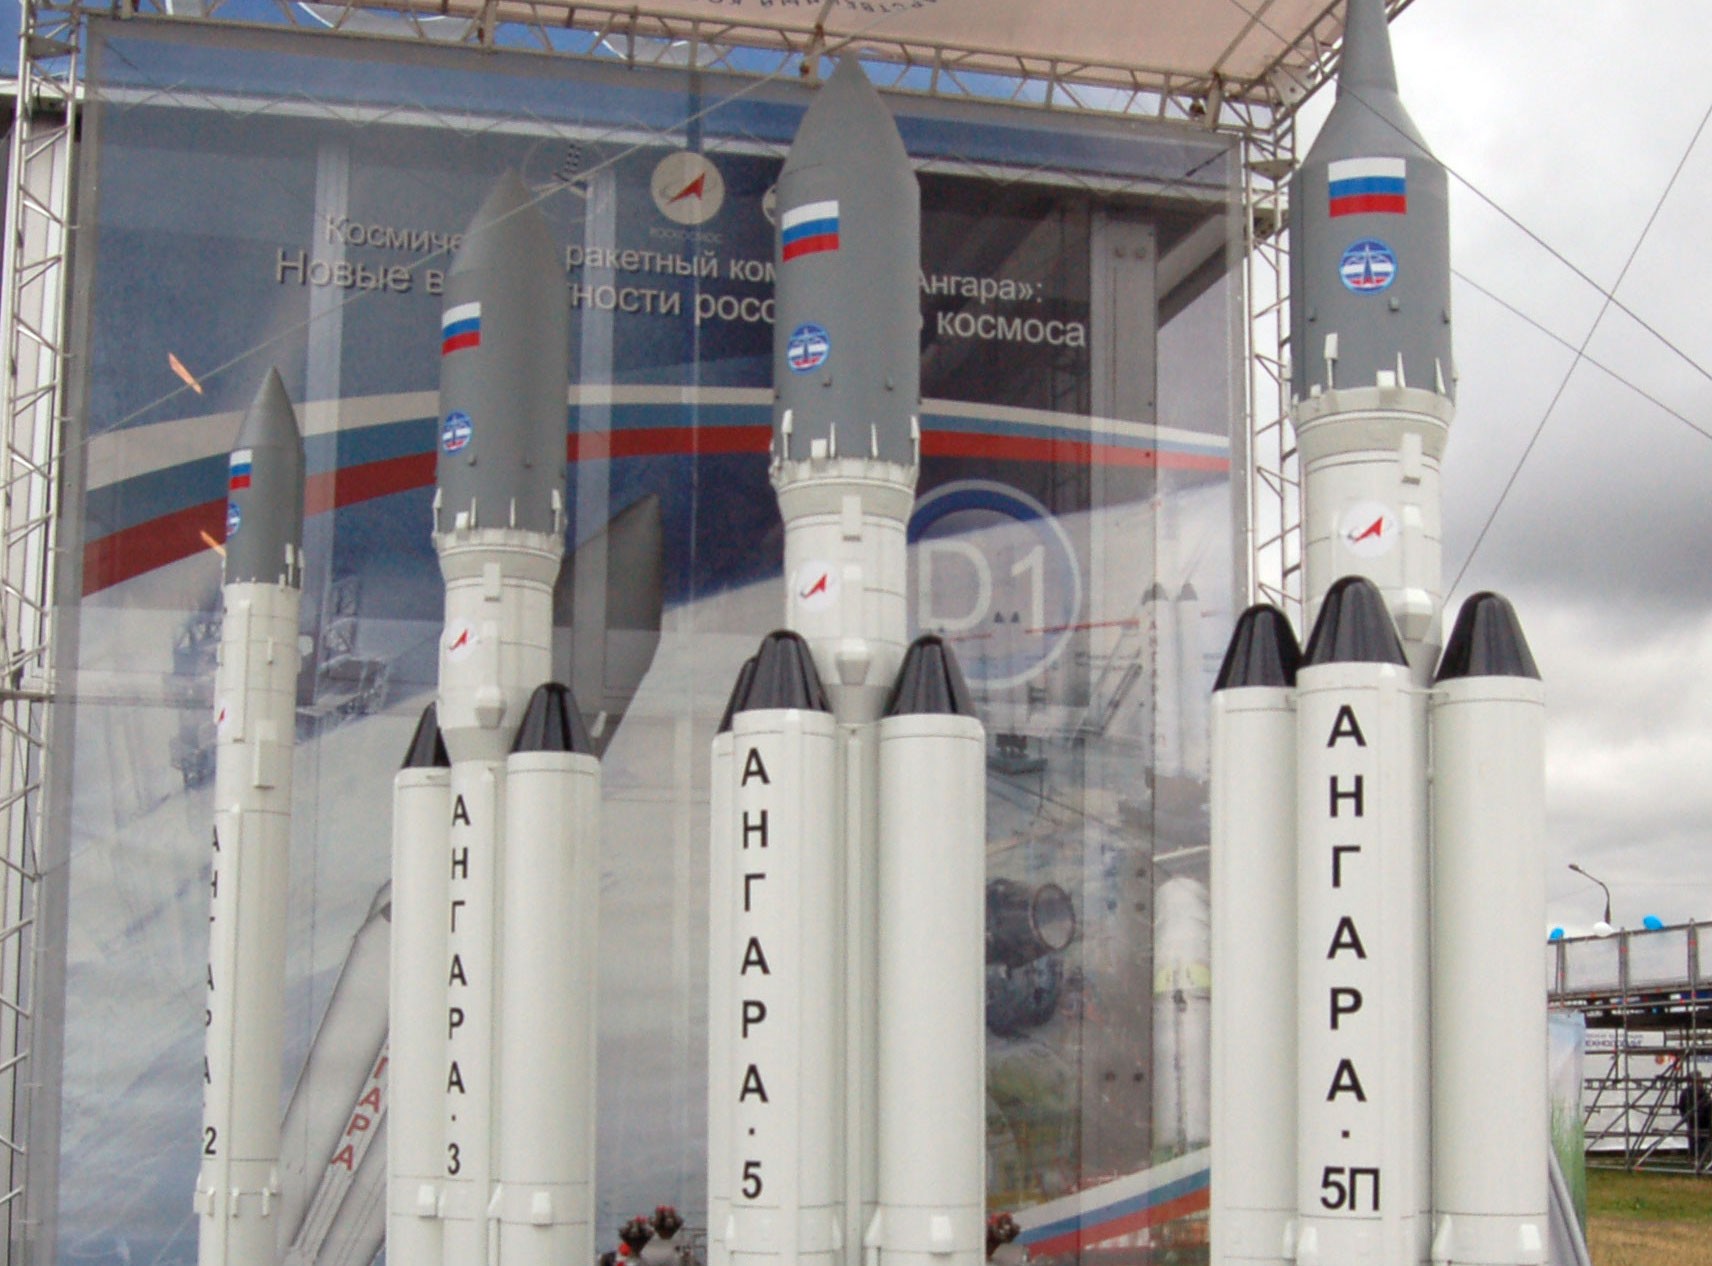 Makiety rakiet z rodziny Angara na targach MAKS-2009 w Rosji. Fot. Wikipedia [CC-BY-SA-3.0]